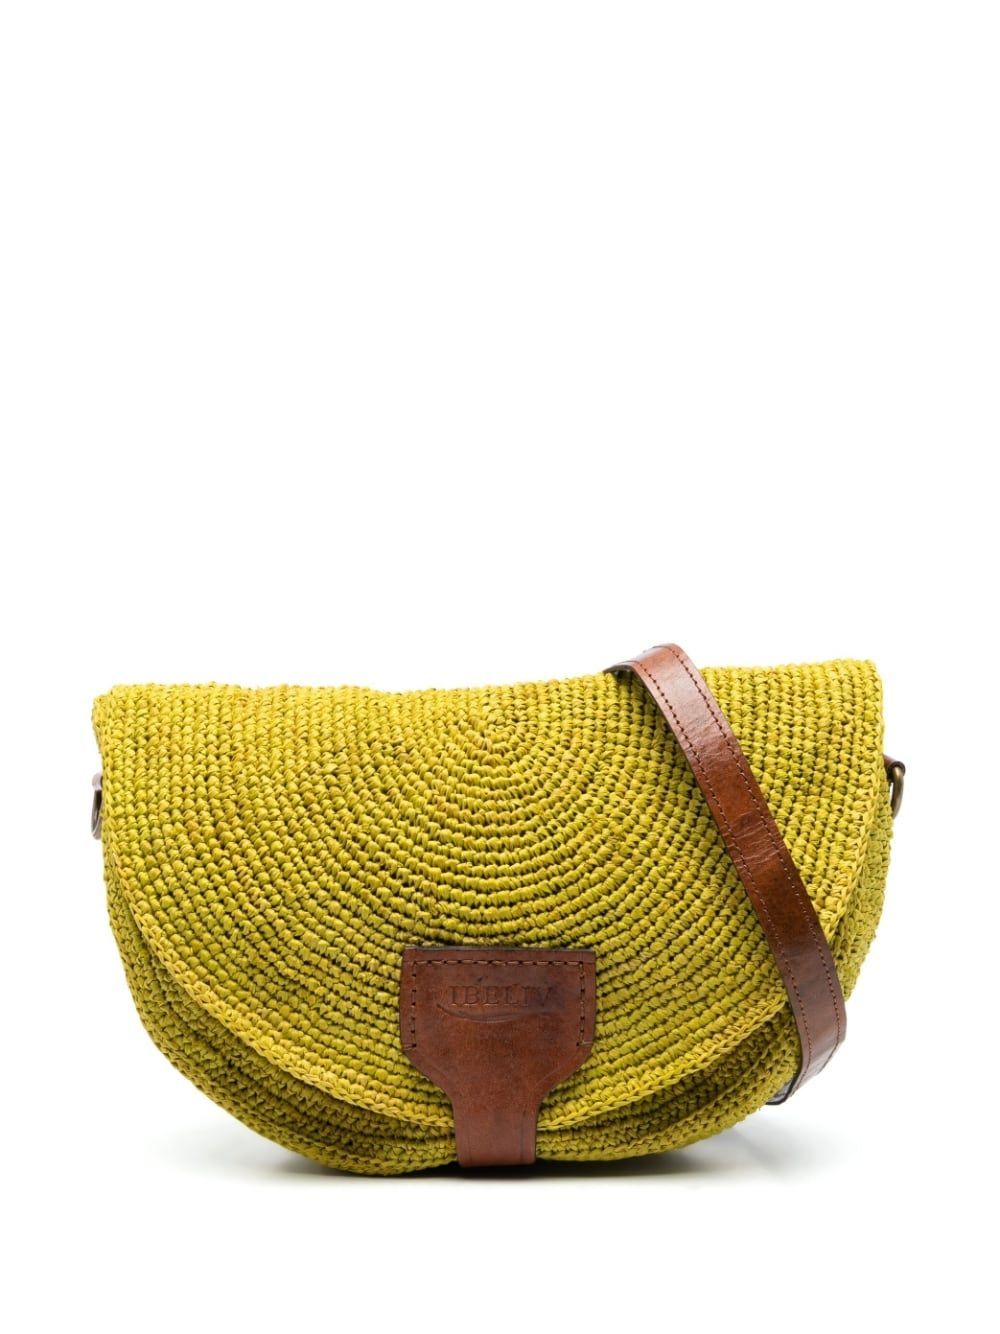 Shop Ibeliv Women's Handbag: Tiako Crossbody